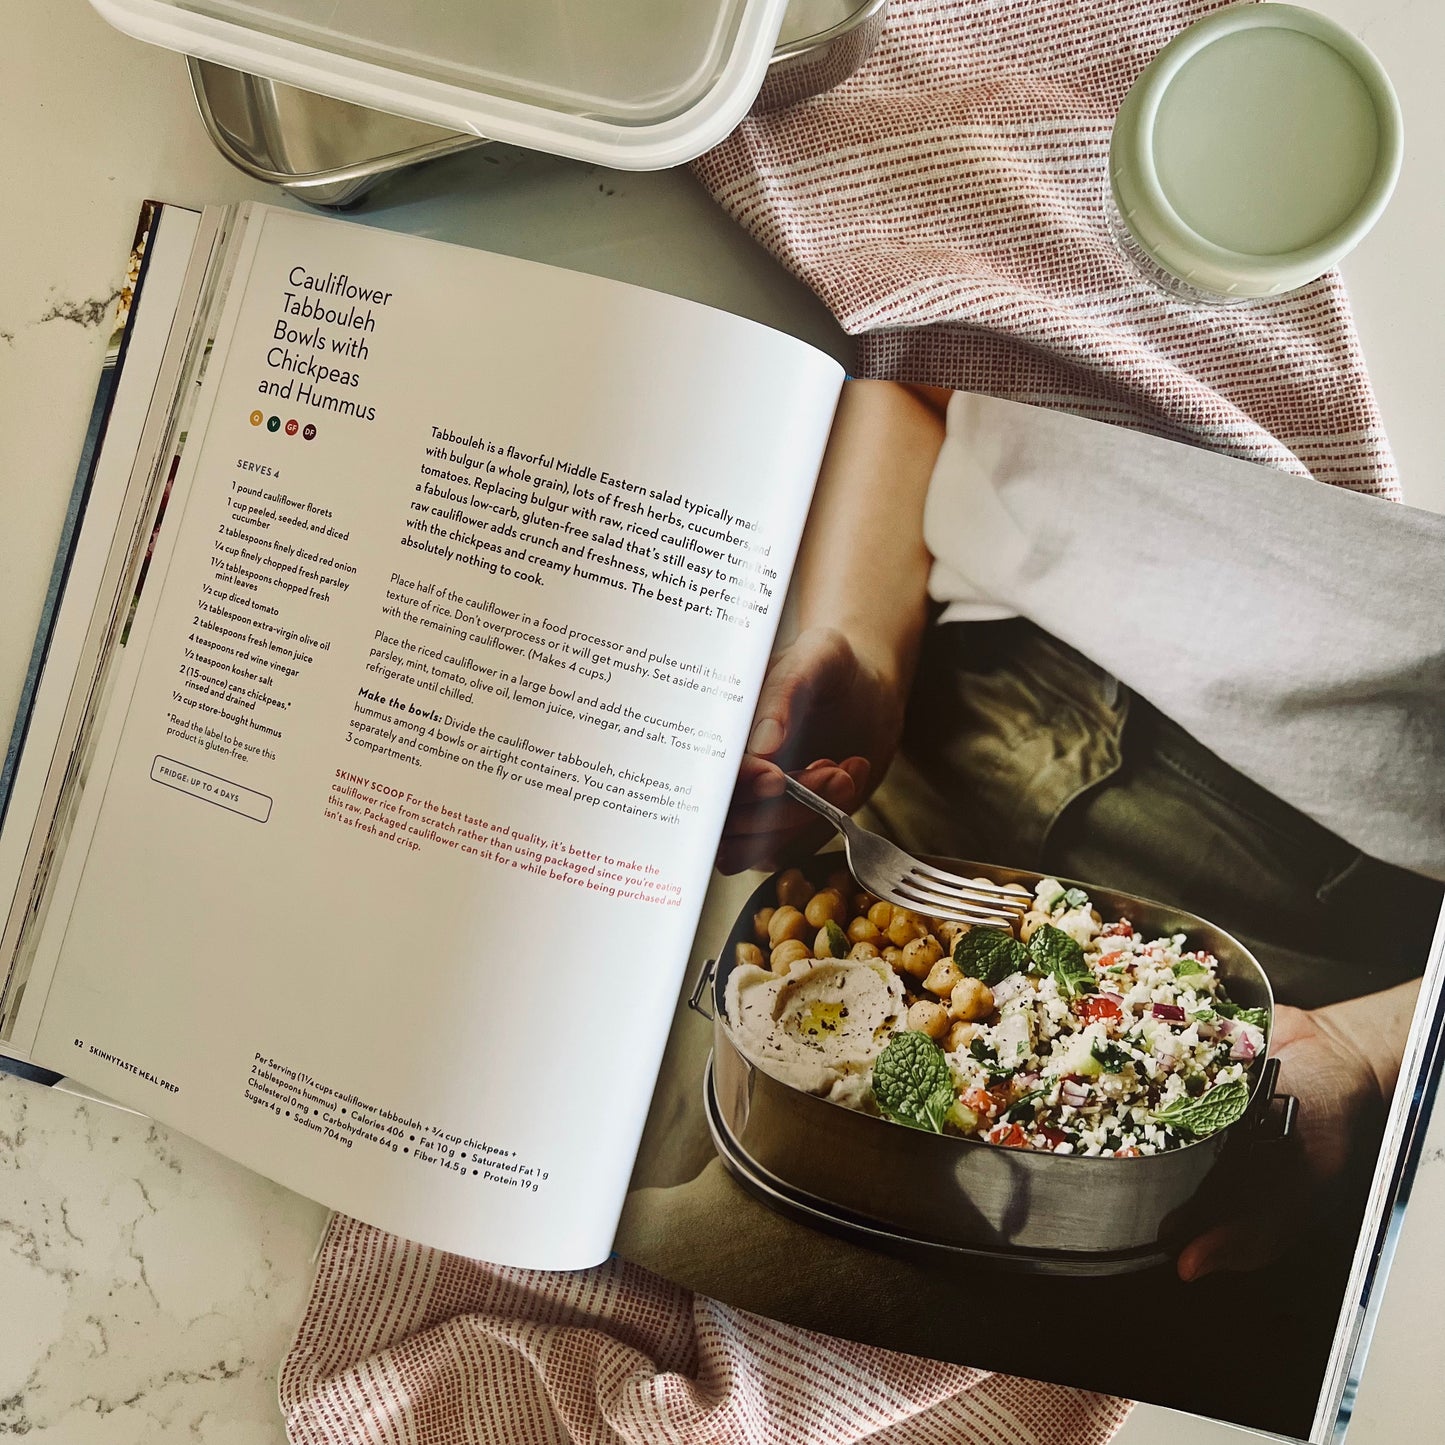 Skinnytaste Meal Prep Cookbook